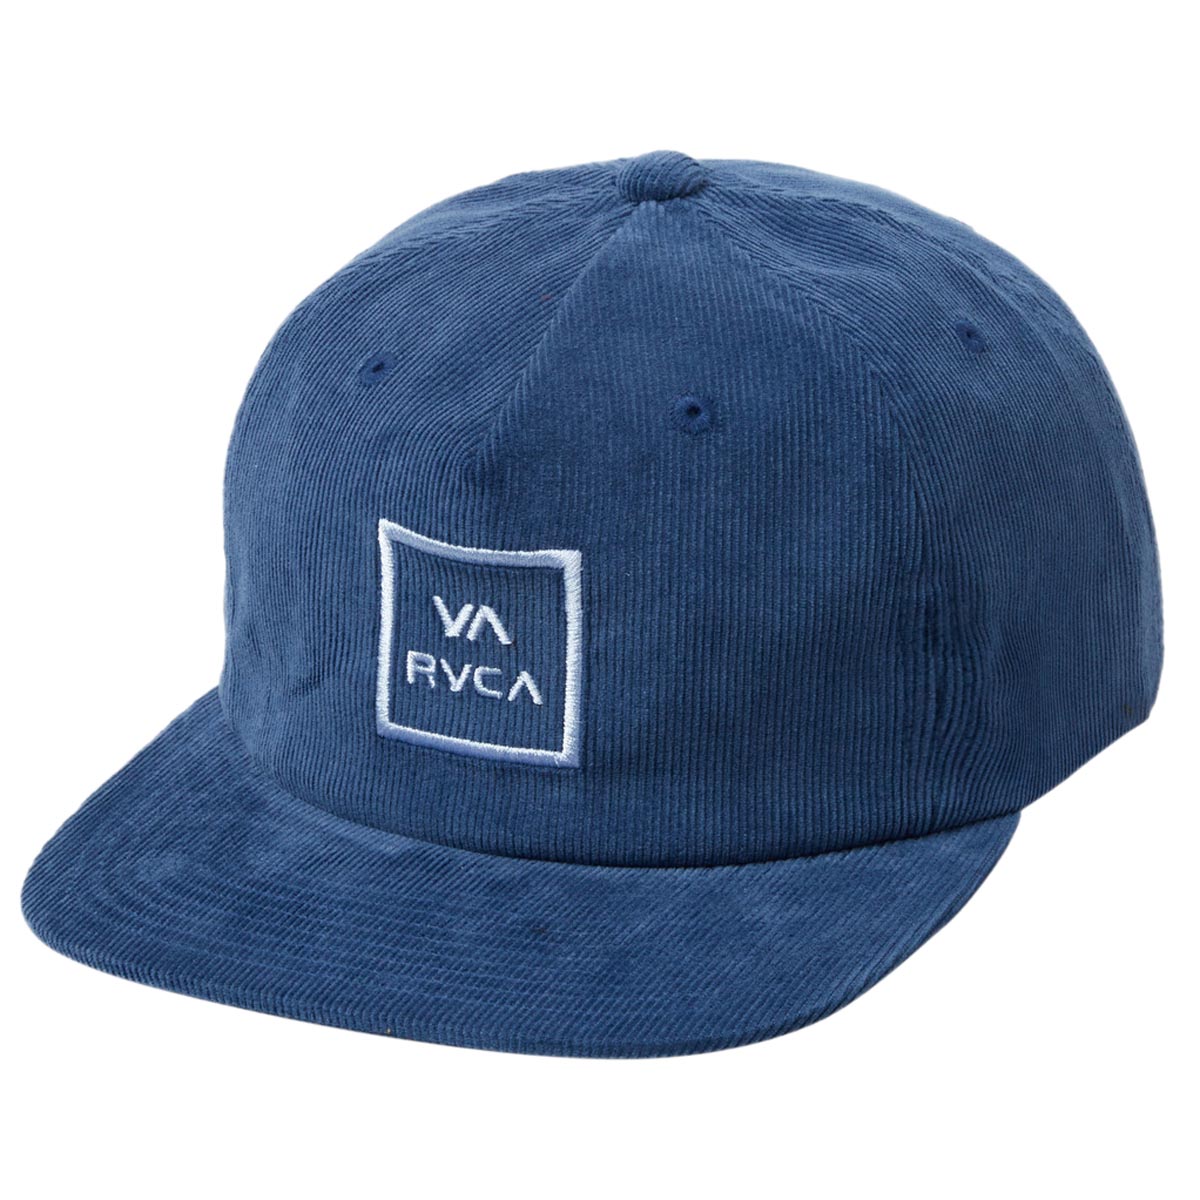 RVCA Freeman Snapback Hat - Dark Blue image 1